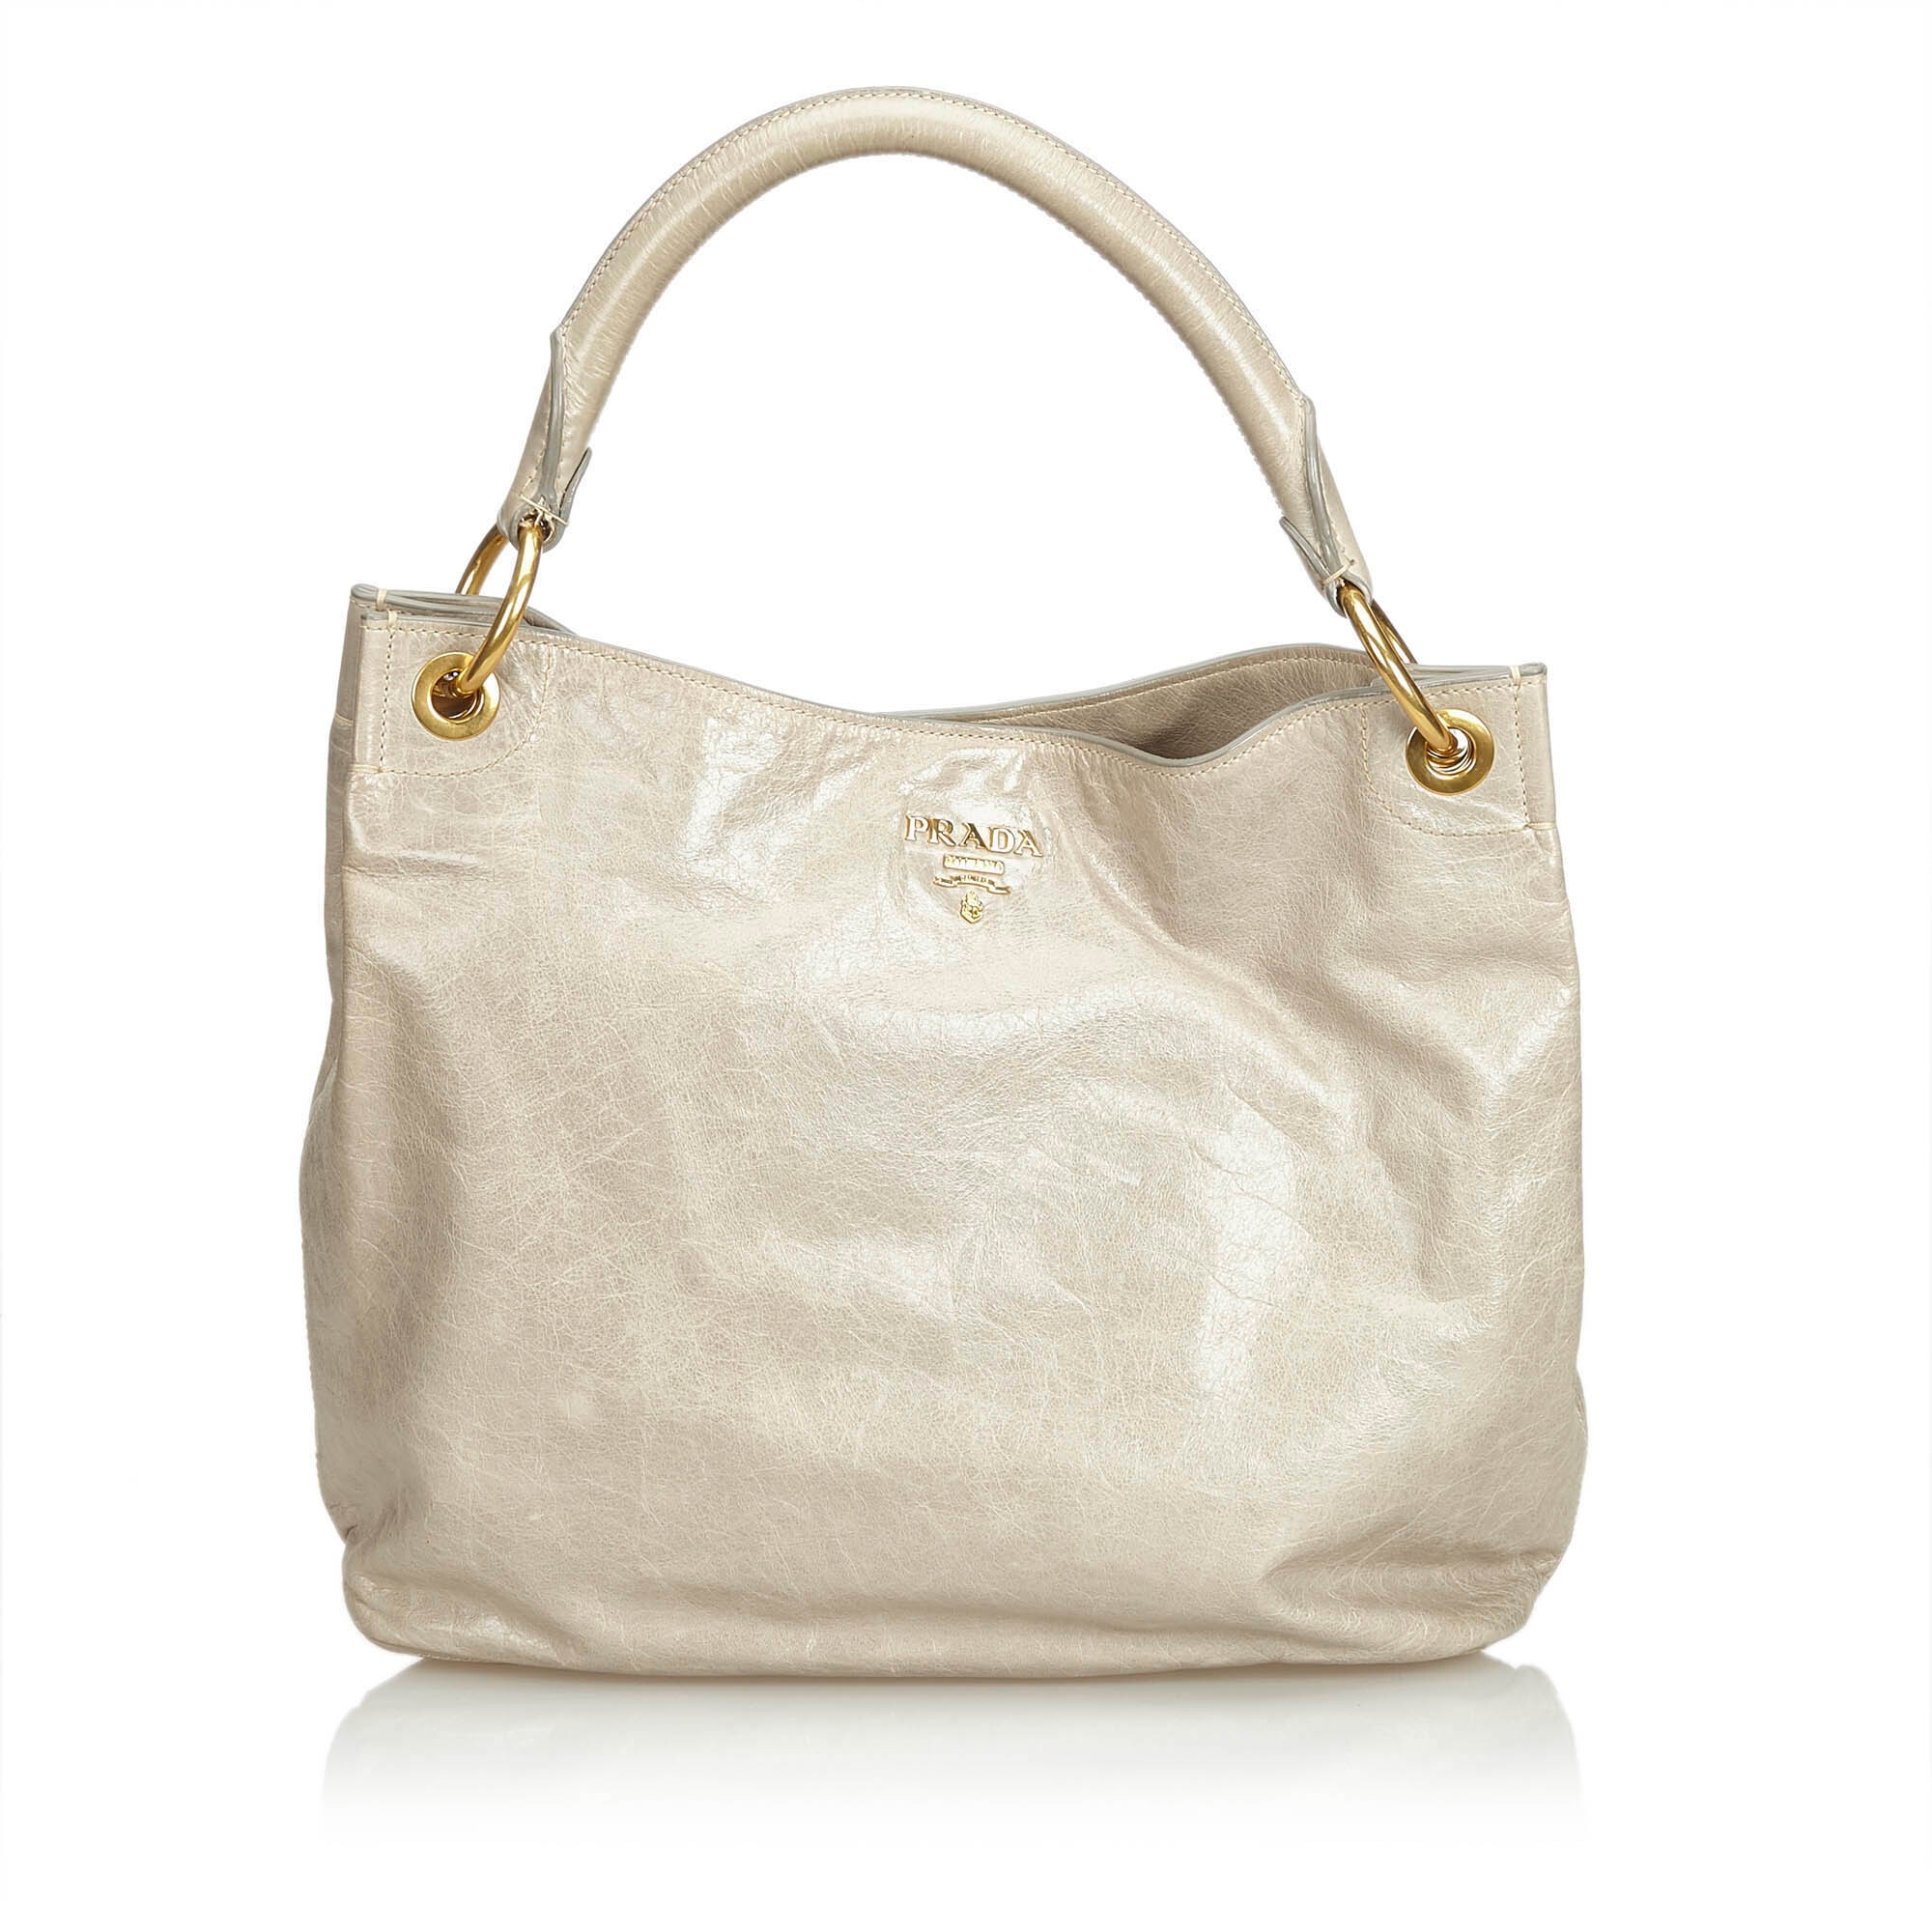 Prada Gray leather handbag - Harvey Nichols